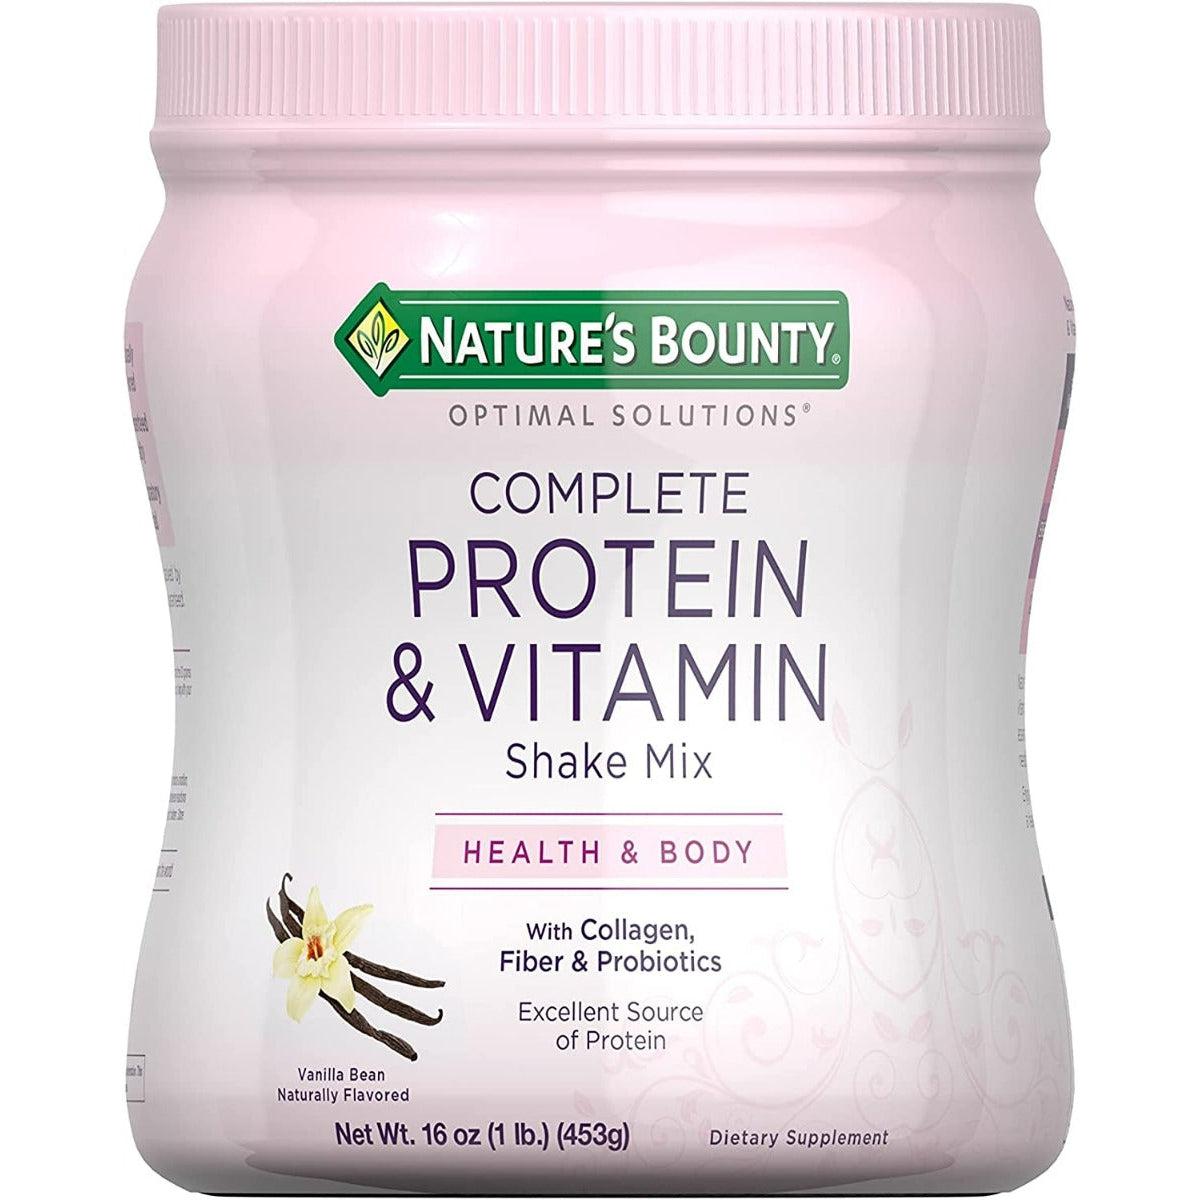 Nature's Bounty Complete Protein & Vitamin Shake Mix Vanilla Bean with Collagen, Fiber & Probiotics